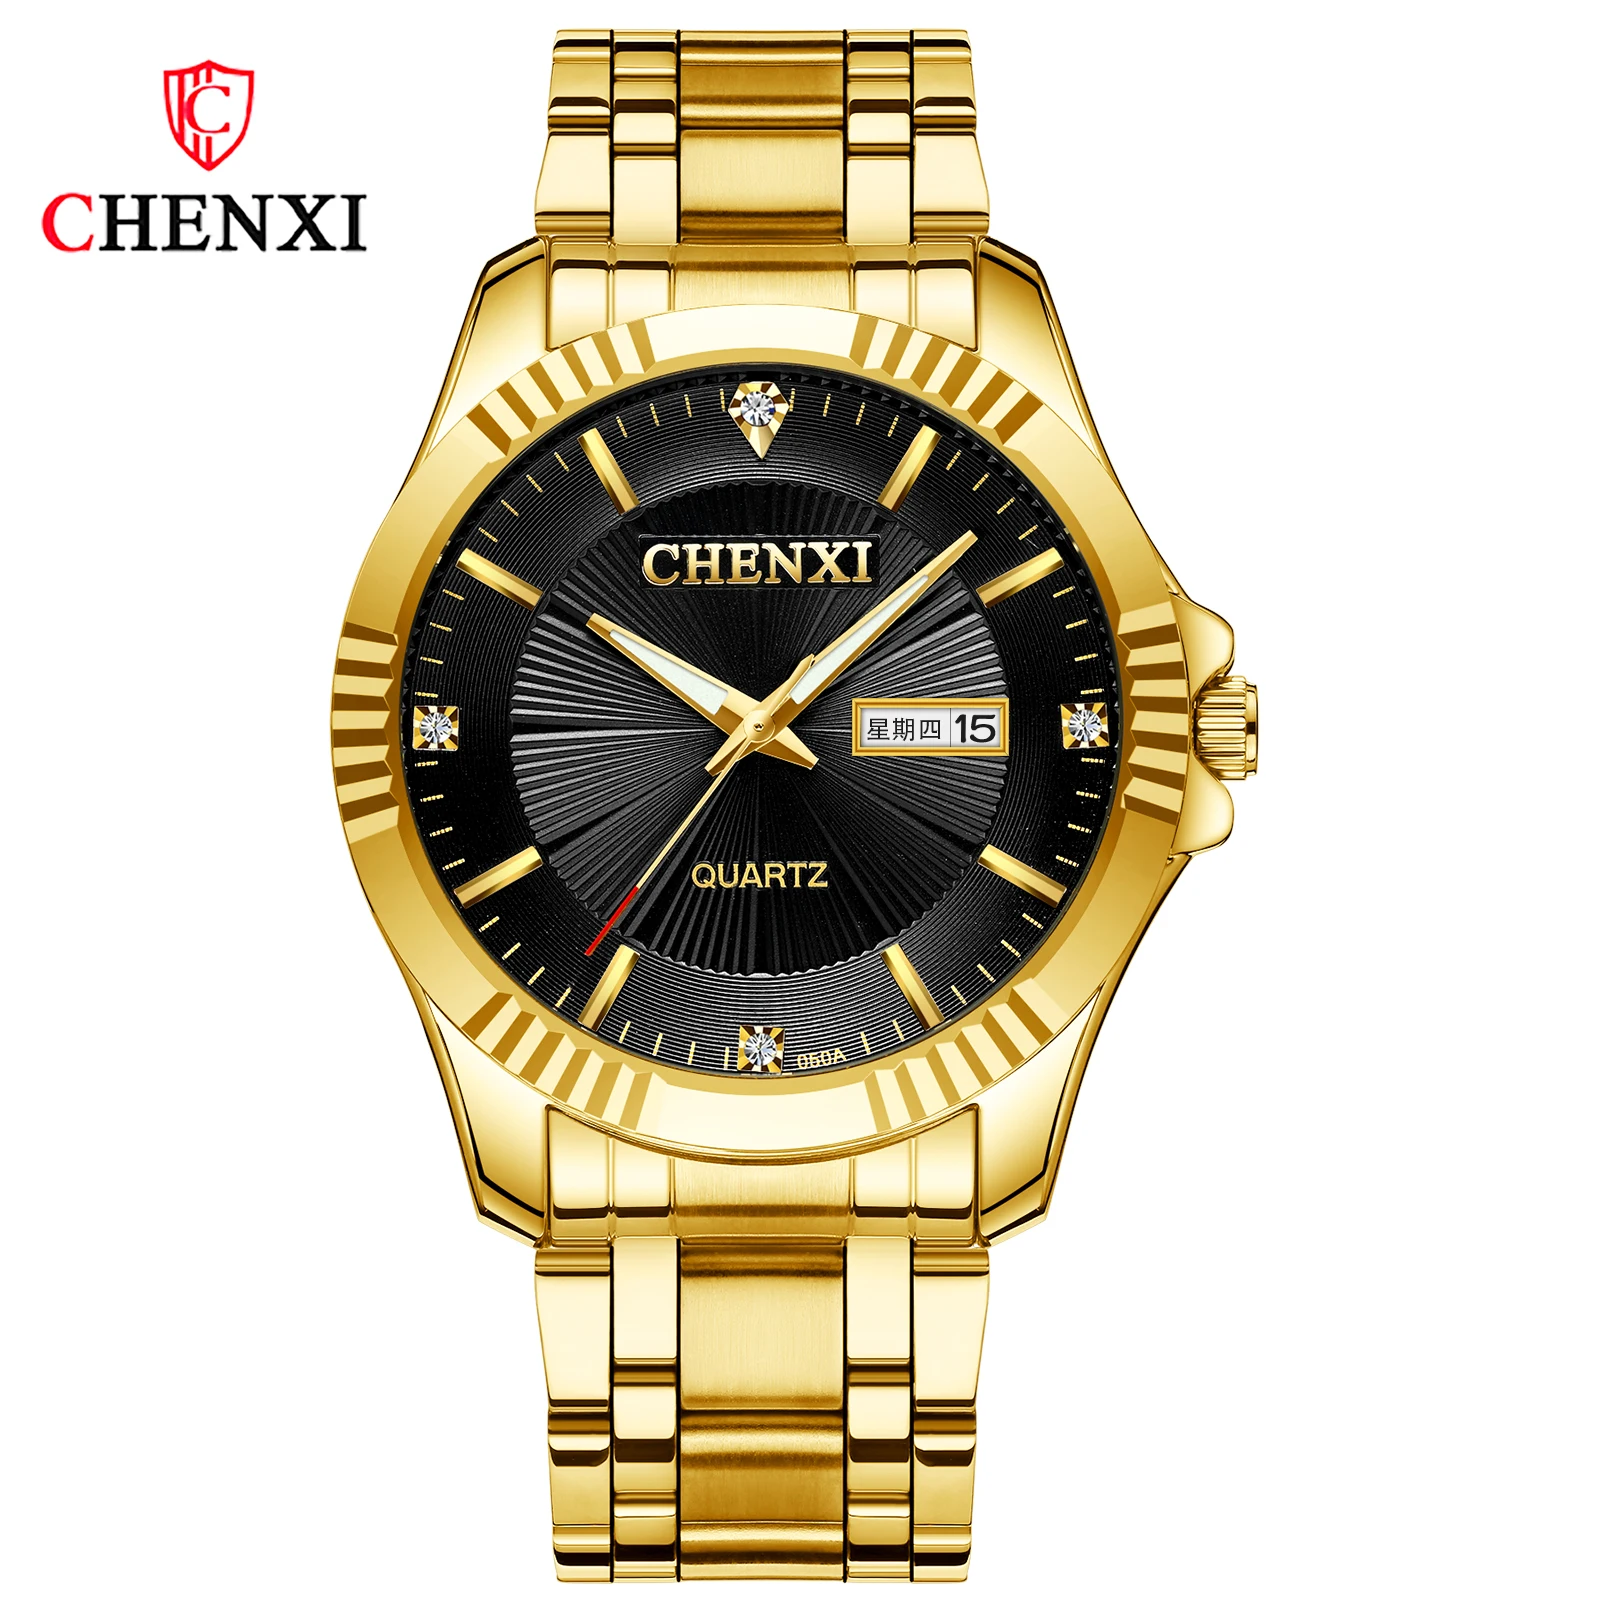 CHENXI Watch Men Top Brand Men Watches Full Steel Waterproof Casual Quartz Date Sport Military Wrist Watch Relogio Masculino